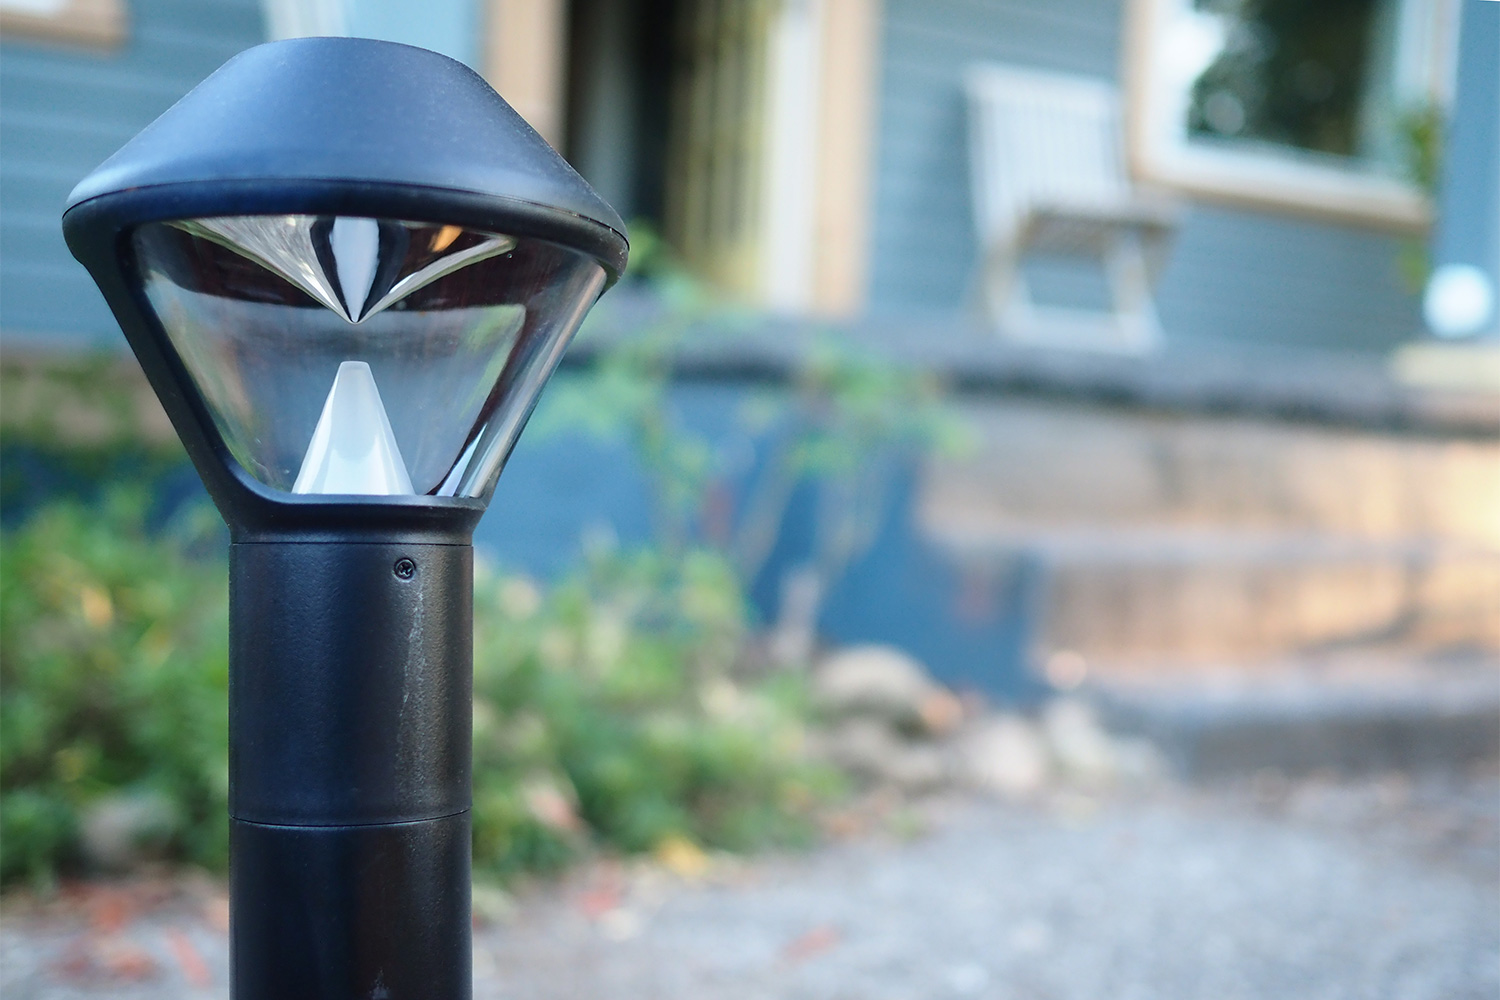 Ring Smart Lighting Brightens Your Yard With Alexa